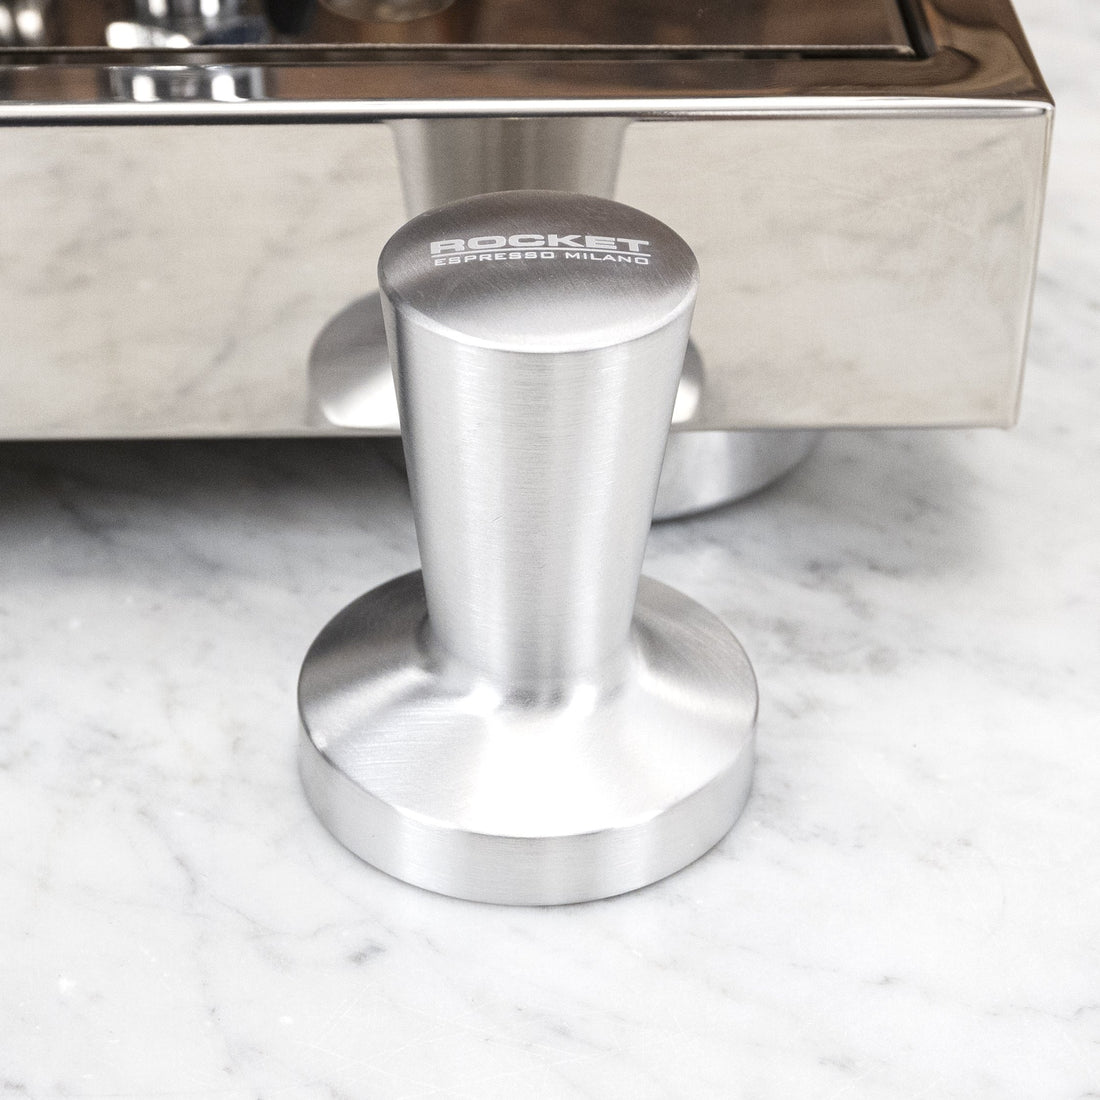 Rocket Espresso Appartamento Serie Nera Espresso Machine - Maple Birdseye